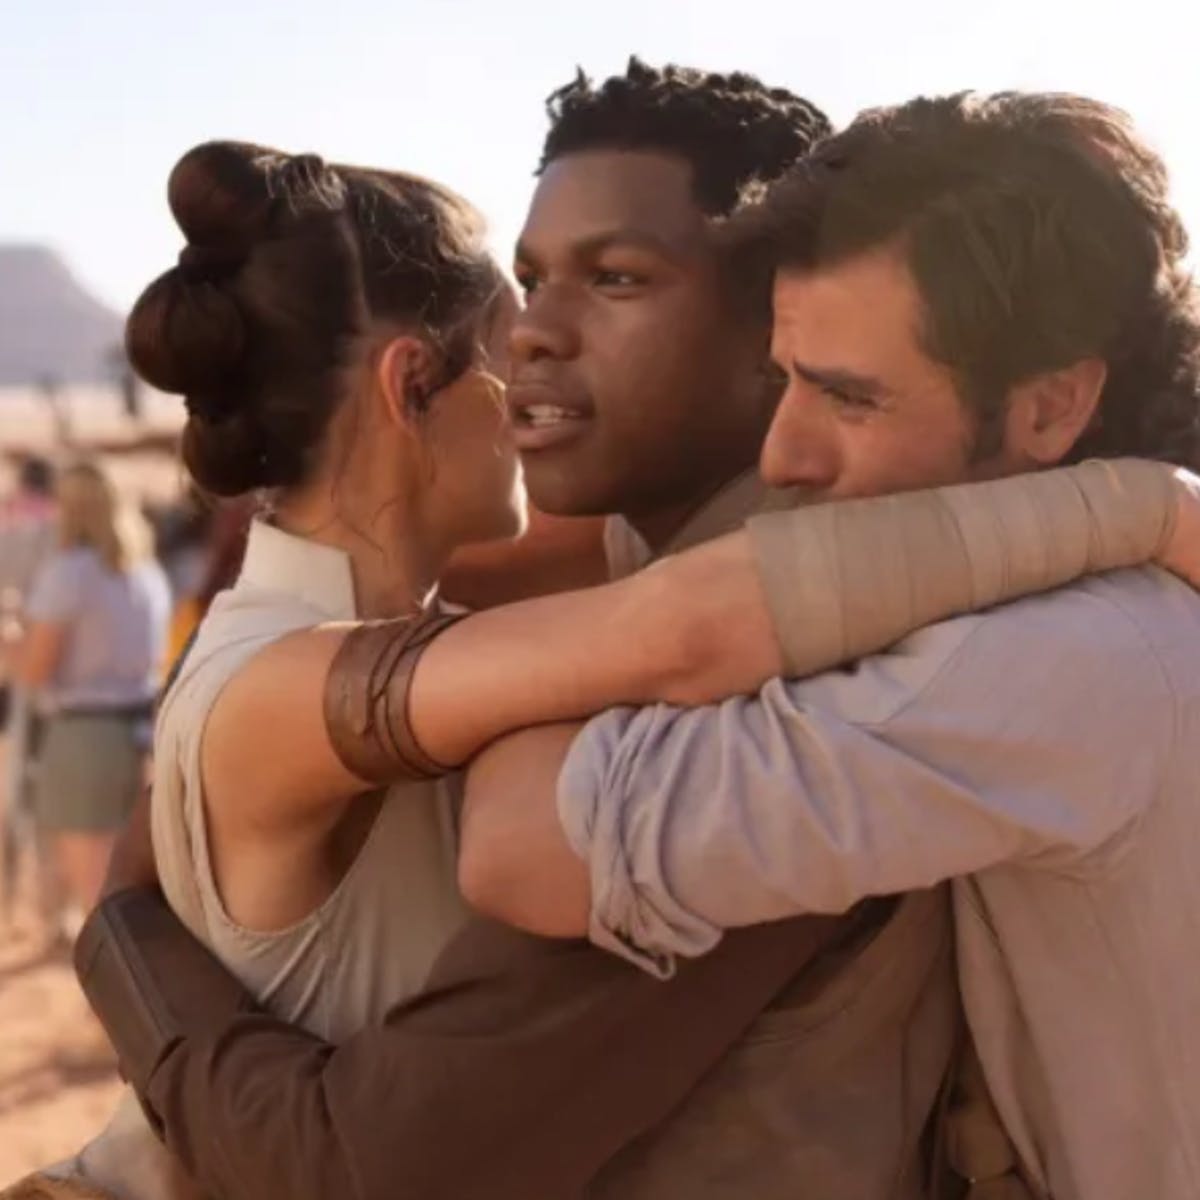 Star Wars The Rise of Skywalker’ Episode Trailer, Title Revealed